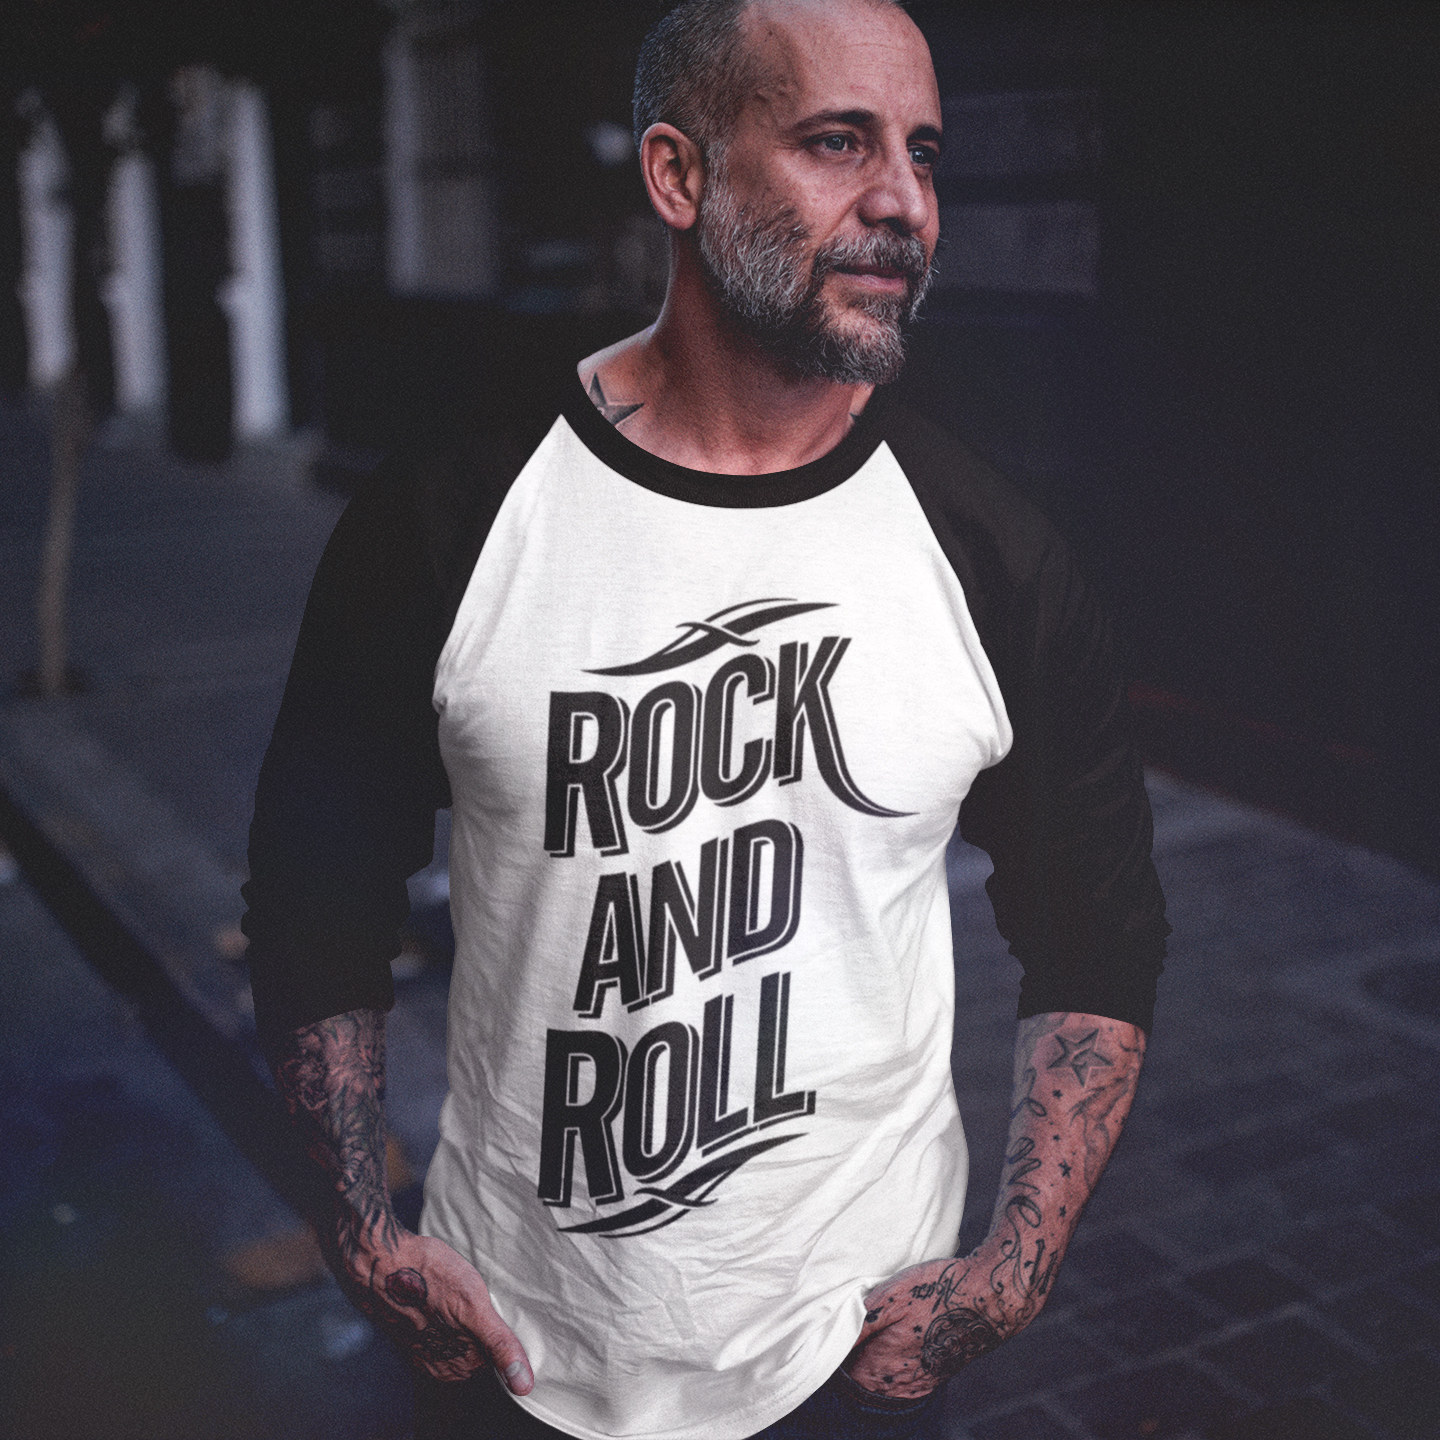 Pins & Bones Classic Rock Top, Vintage Rock Tee, Rock Star Inspired Raglan Baseball And Roll T-Shirt